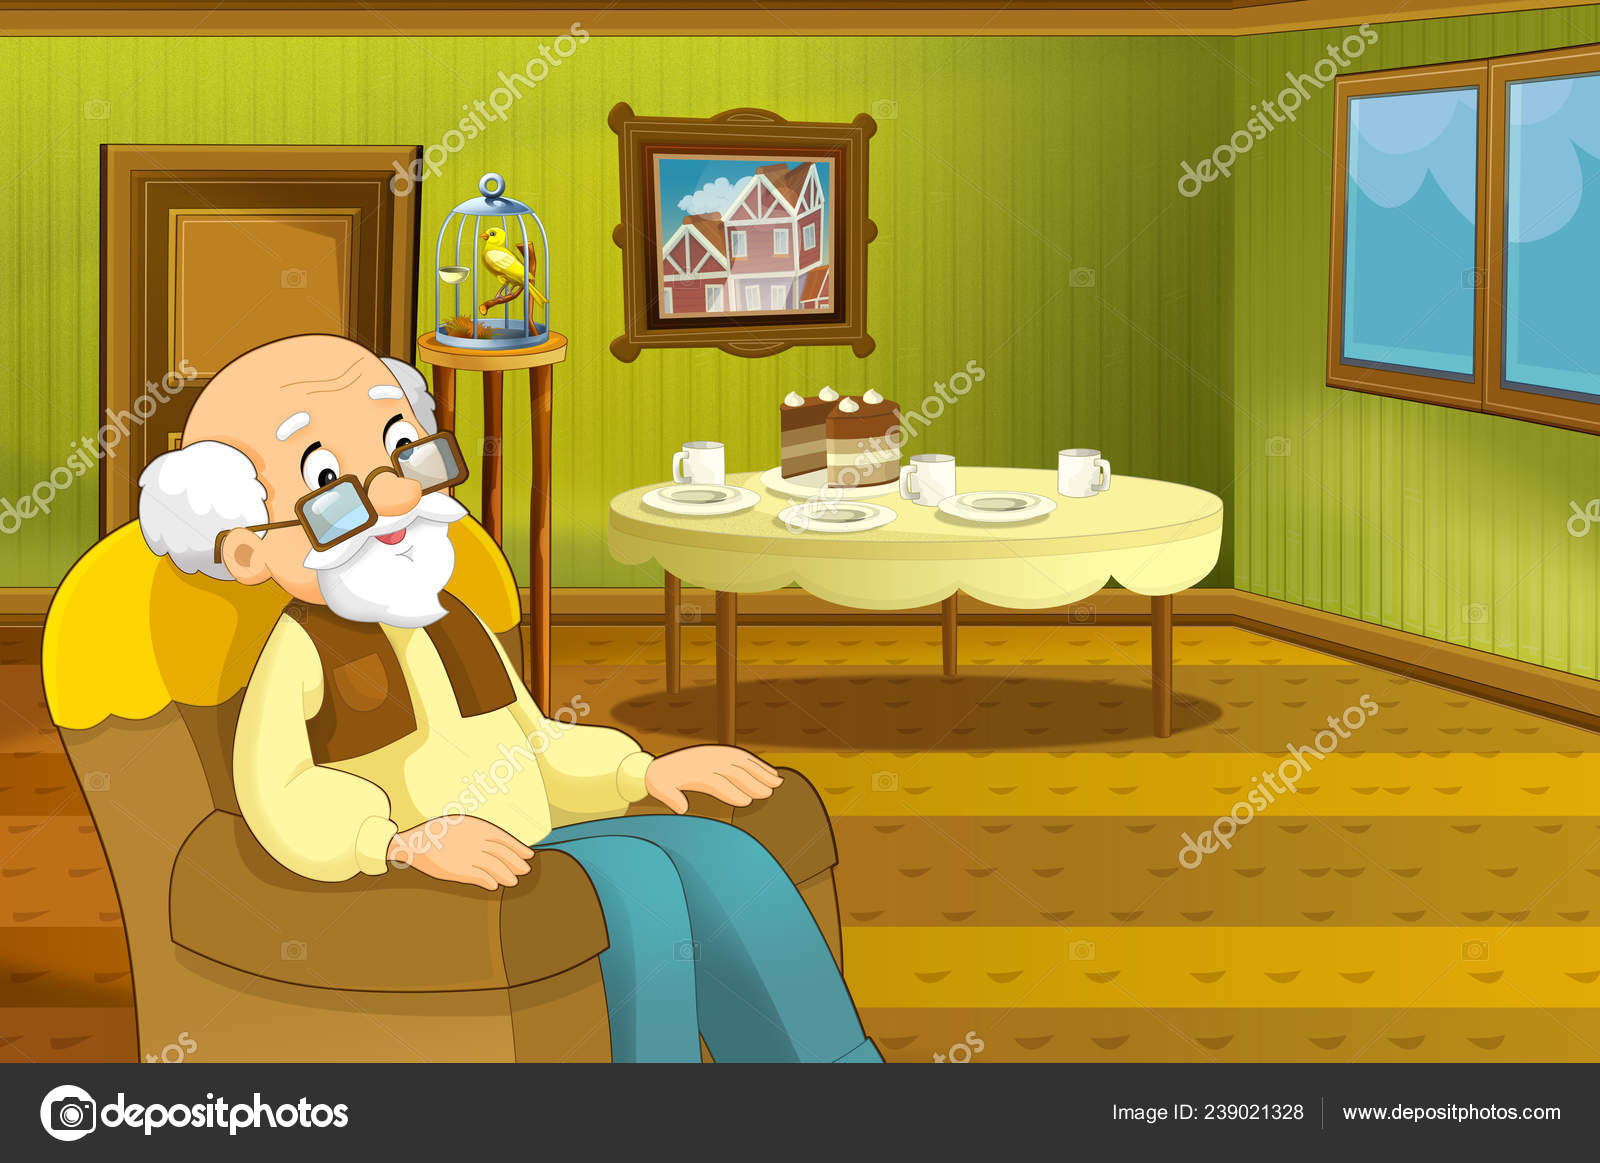 Cartoon Scene House Interior Living Room Older Man Grand Father Stock Photo  by ©illustrator_hft 239021328